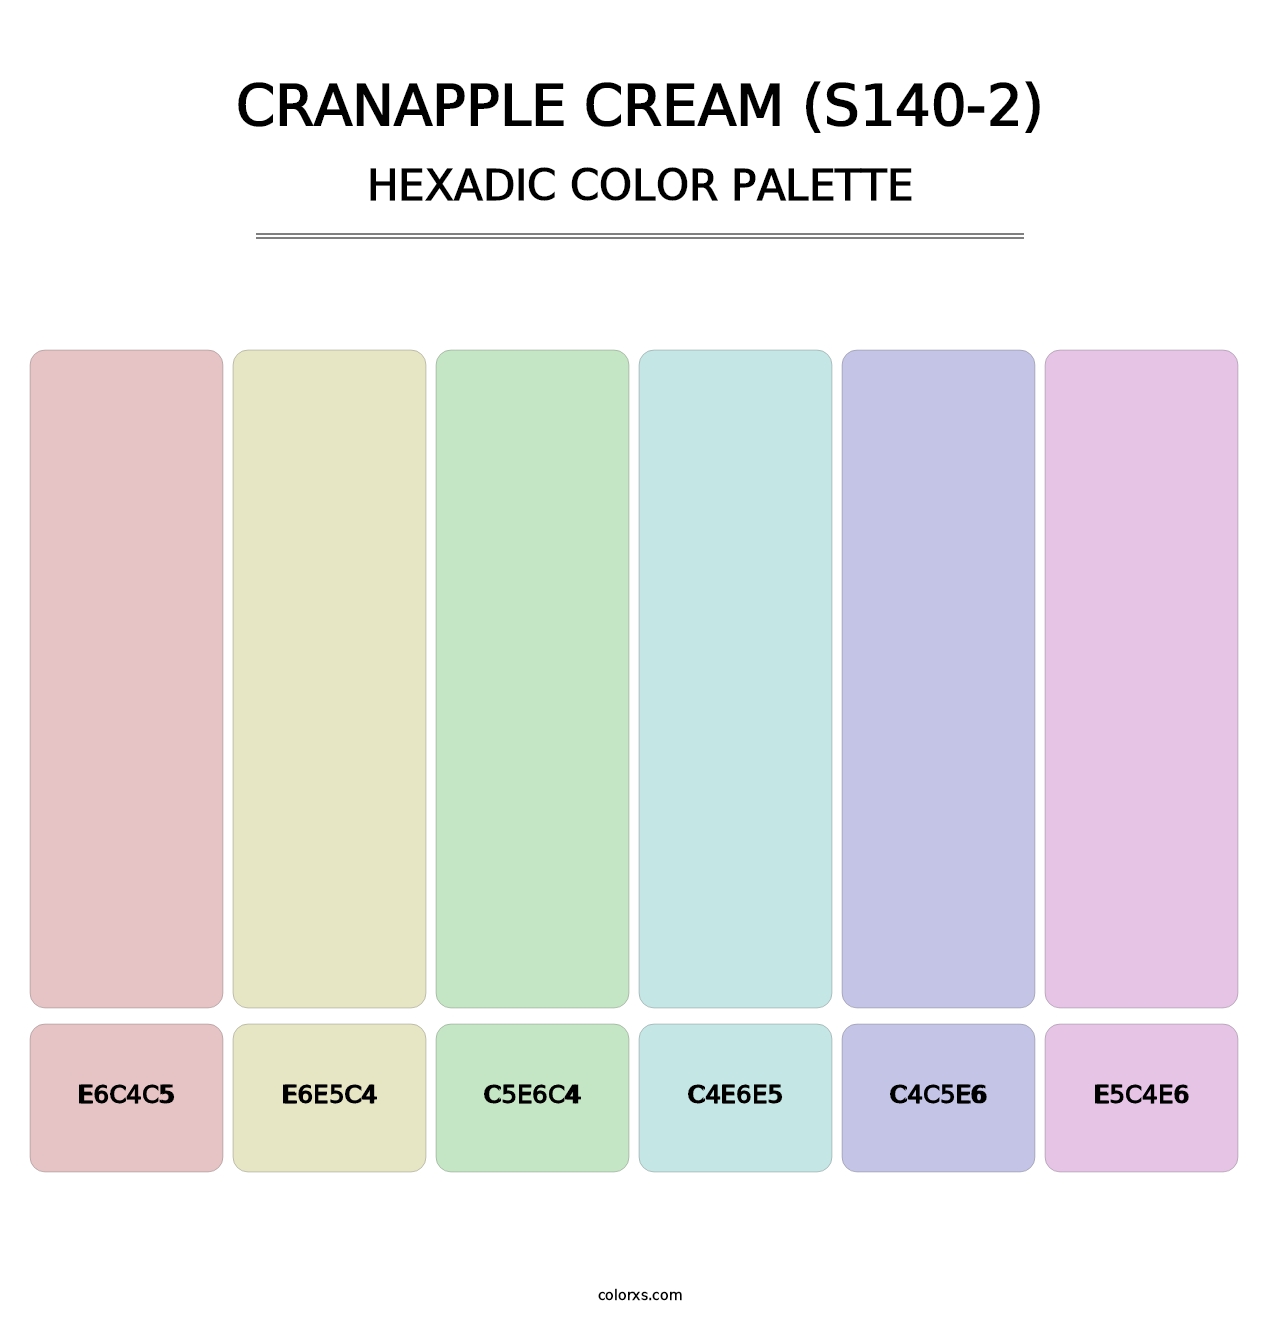 Cranapple Cream (S140-2) - Hexadic Color Palette